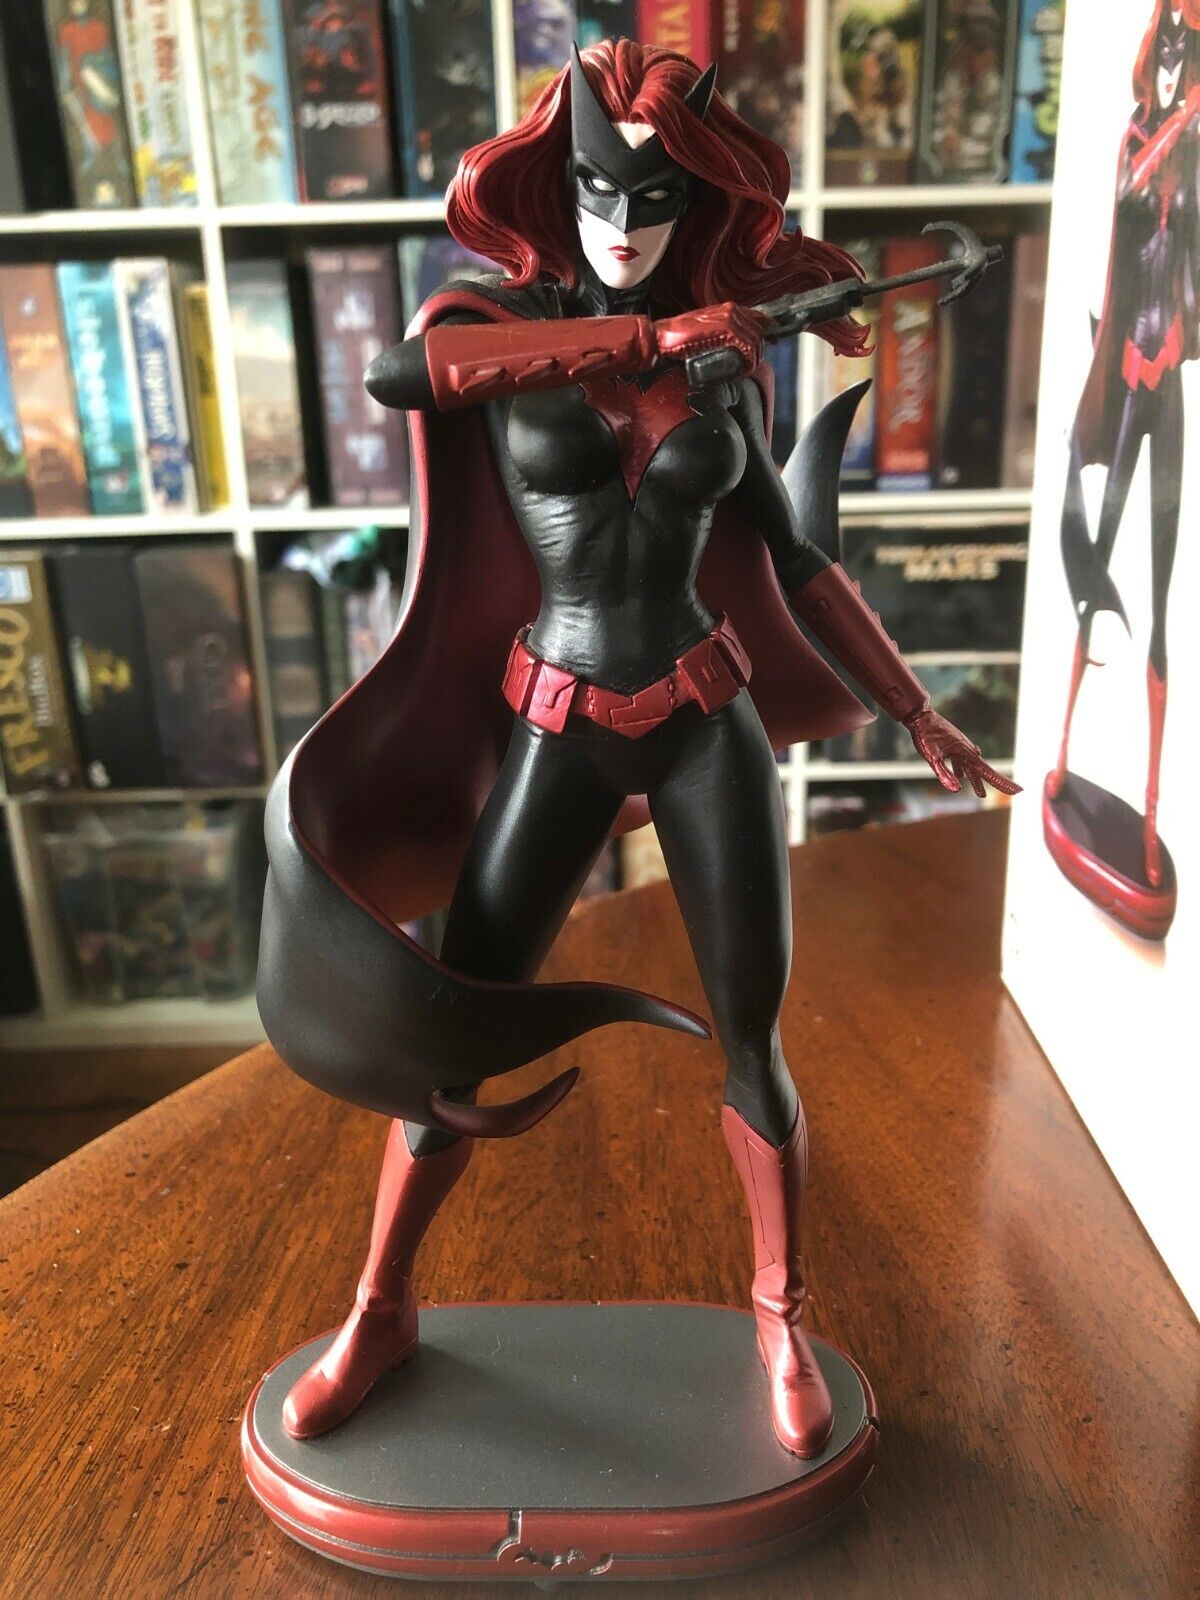 Batwoman Statue DC Cover Girls Collection (Kate Kane) Popularna produkcja krajowa